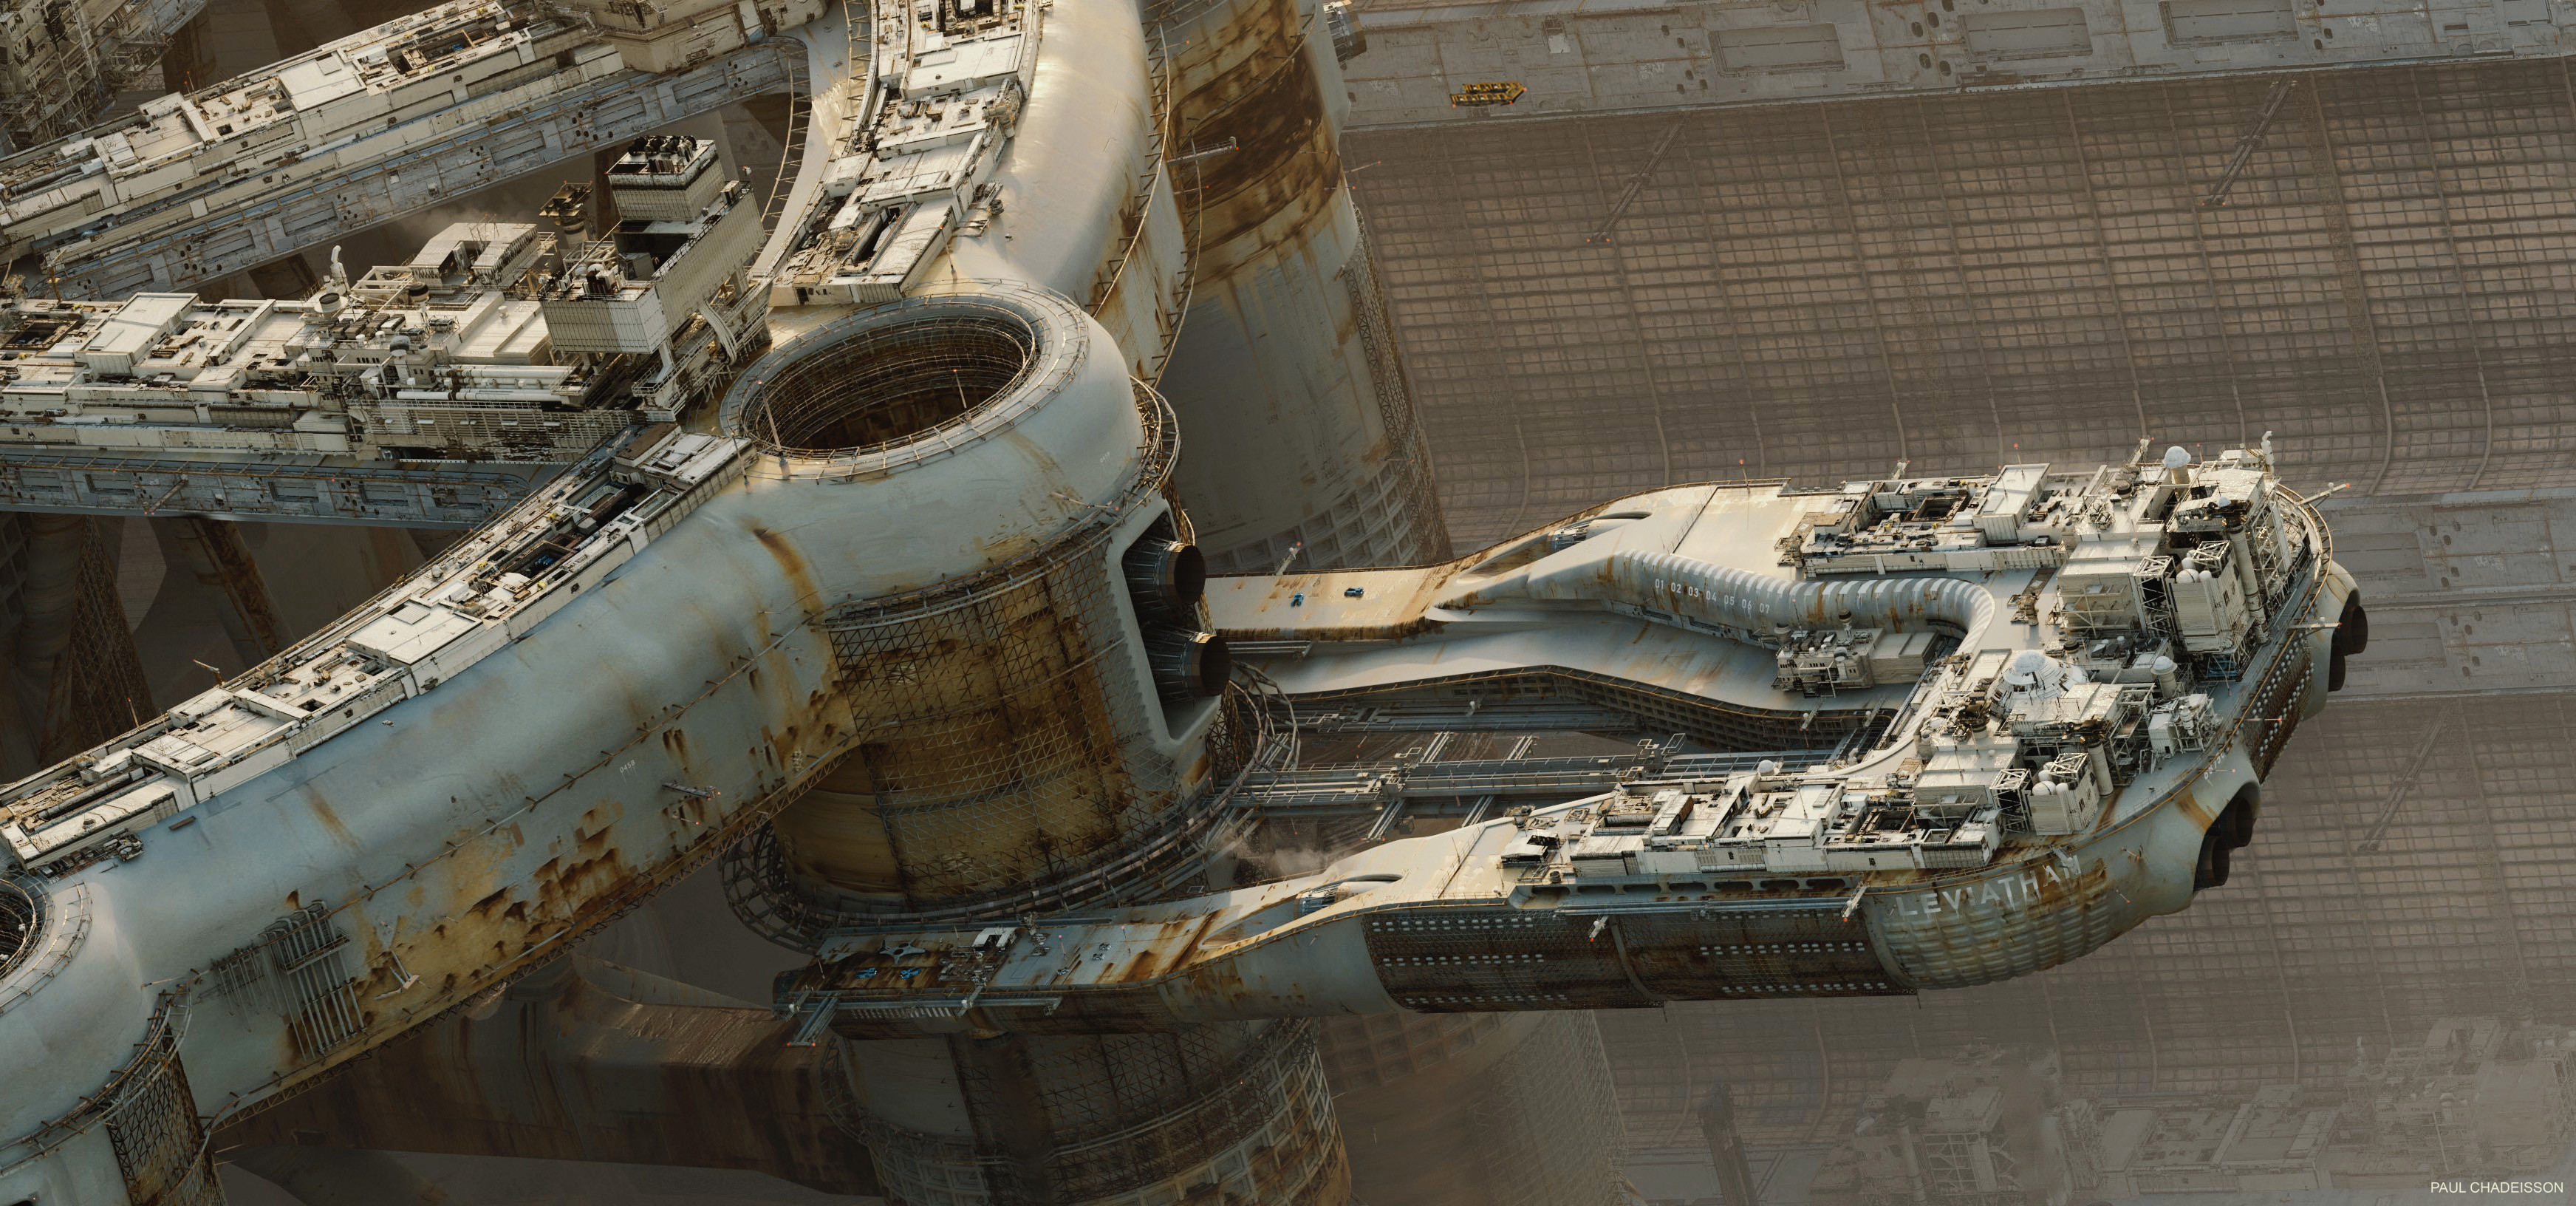 Paul Chadeisson Digital Art CGi Construction Ship Solstice 5 Detailed Artwork Planet Science Fiction 3487x1632